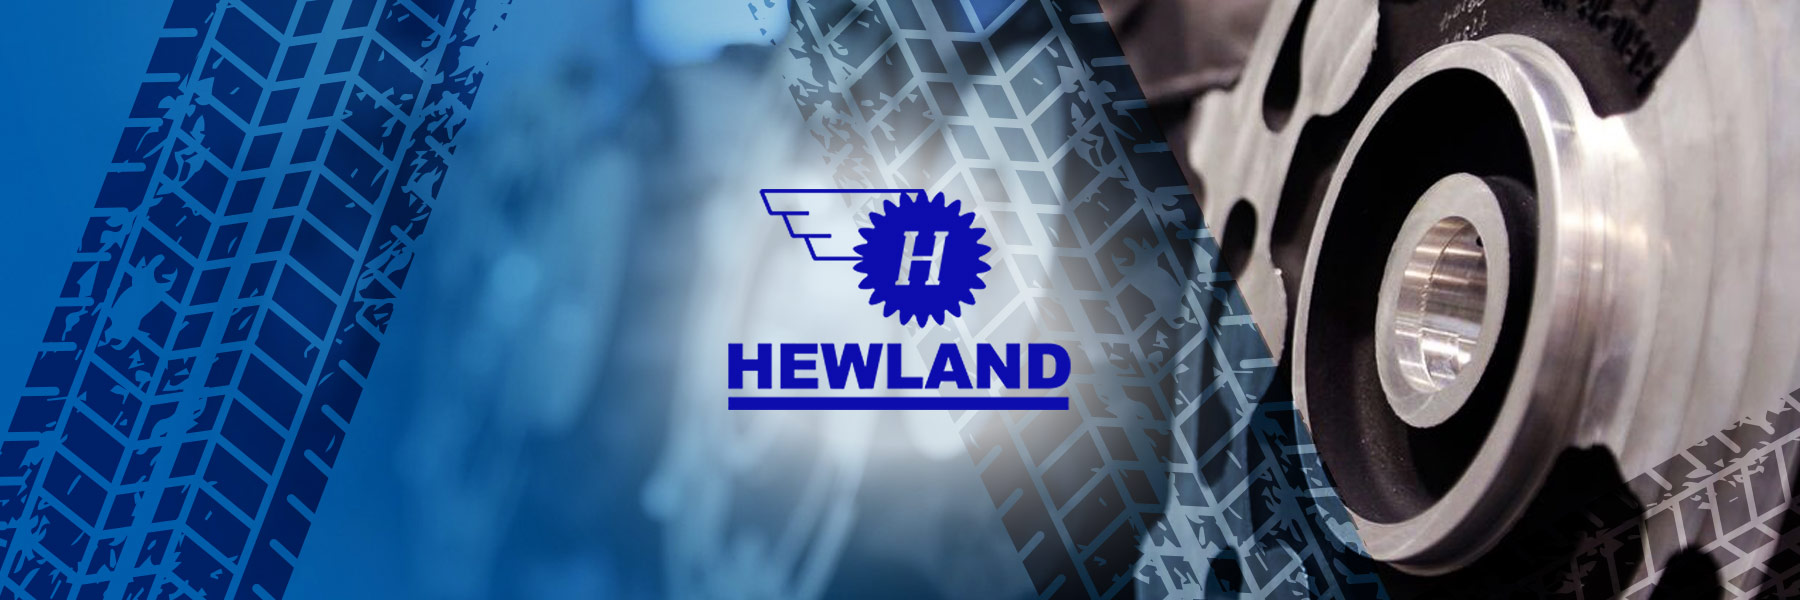 Hewland Engineering